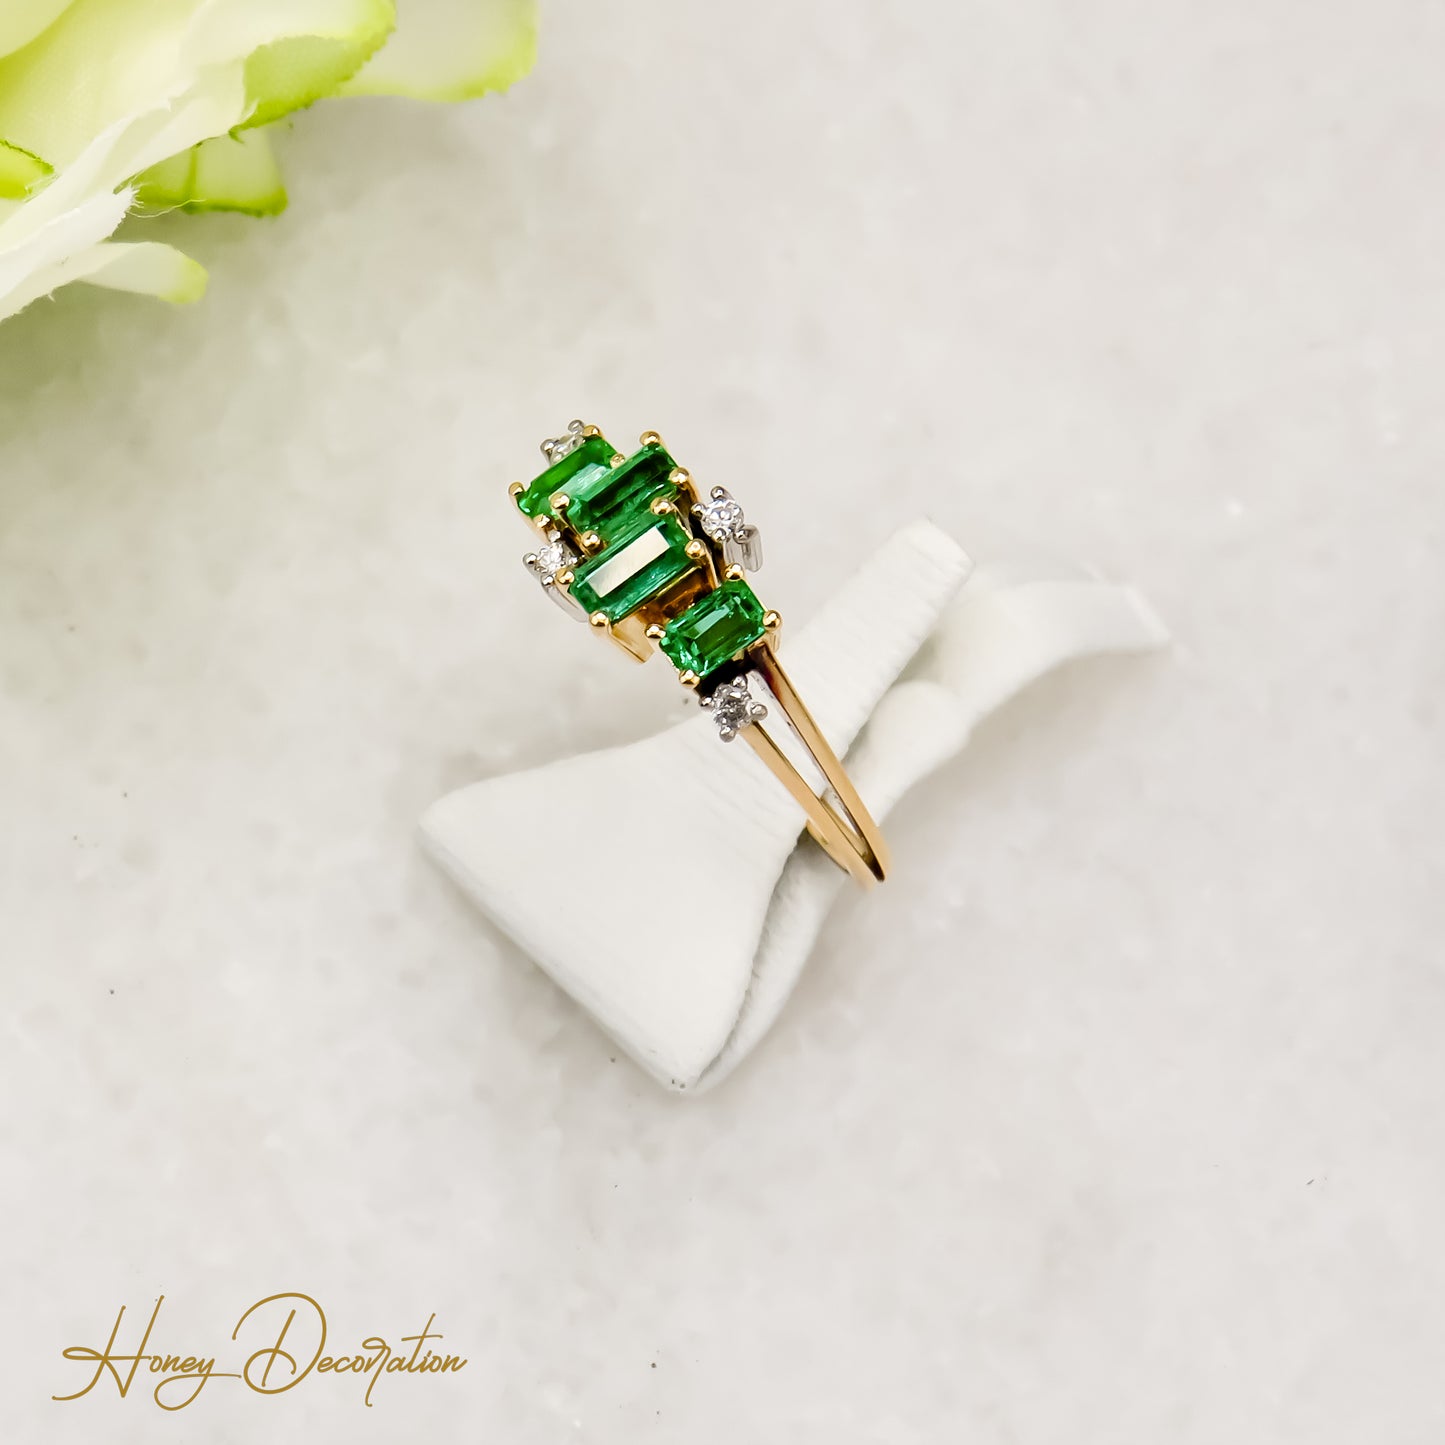 Enchanting emerald ring from 18 karat gold